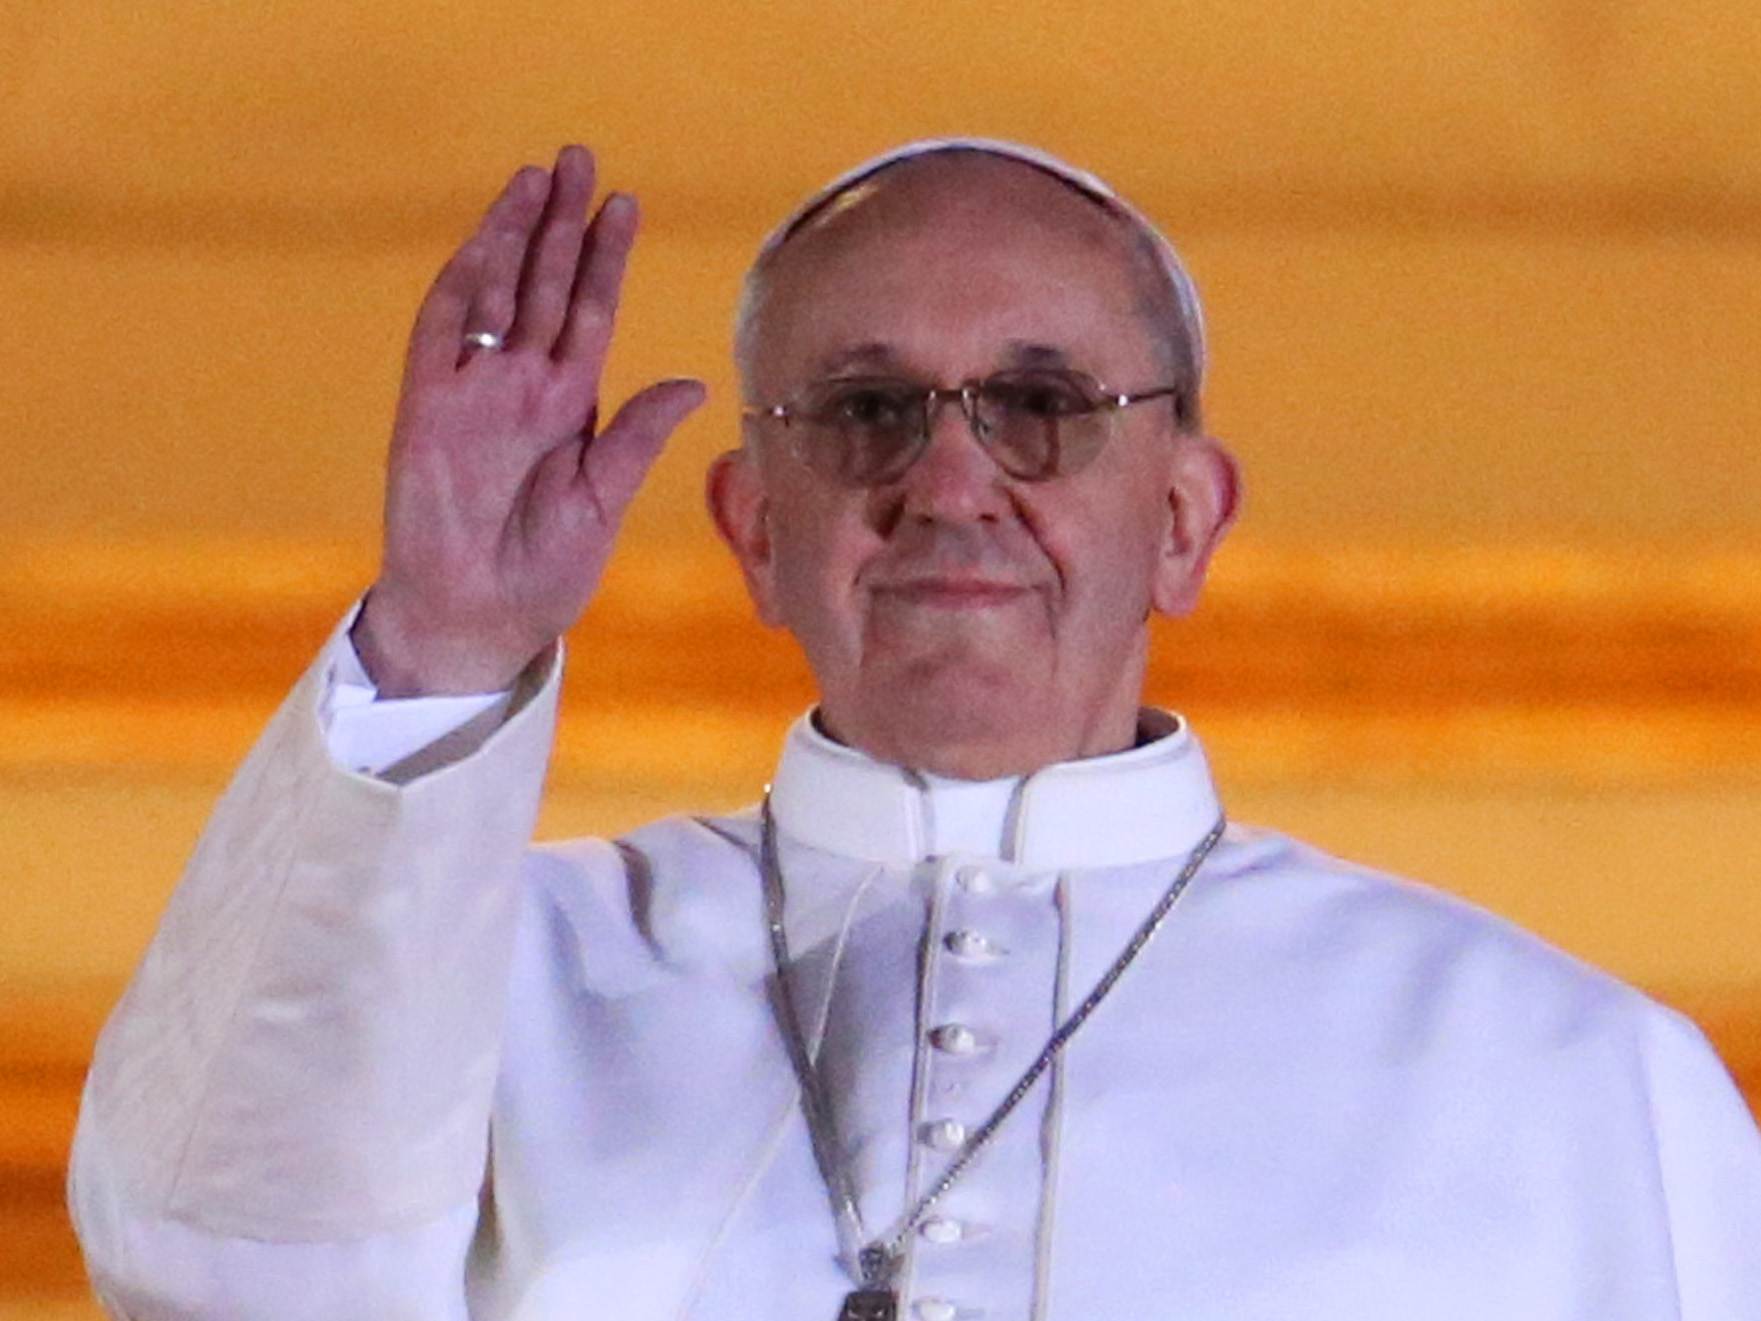 Latin American pope: Meet Jorge Mario Bergoglio